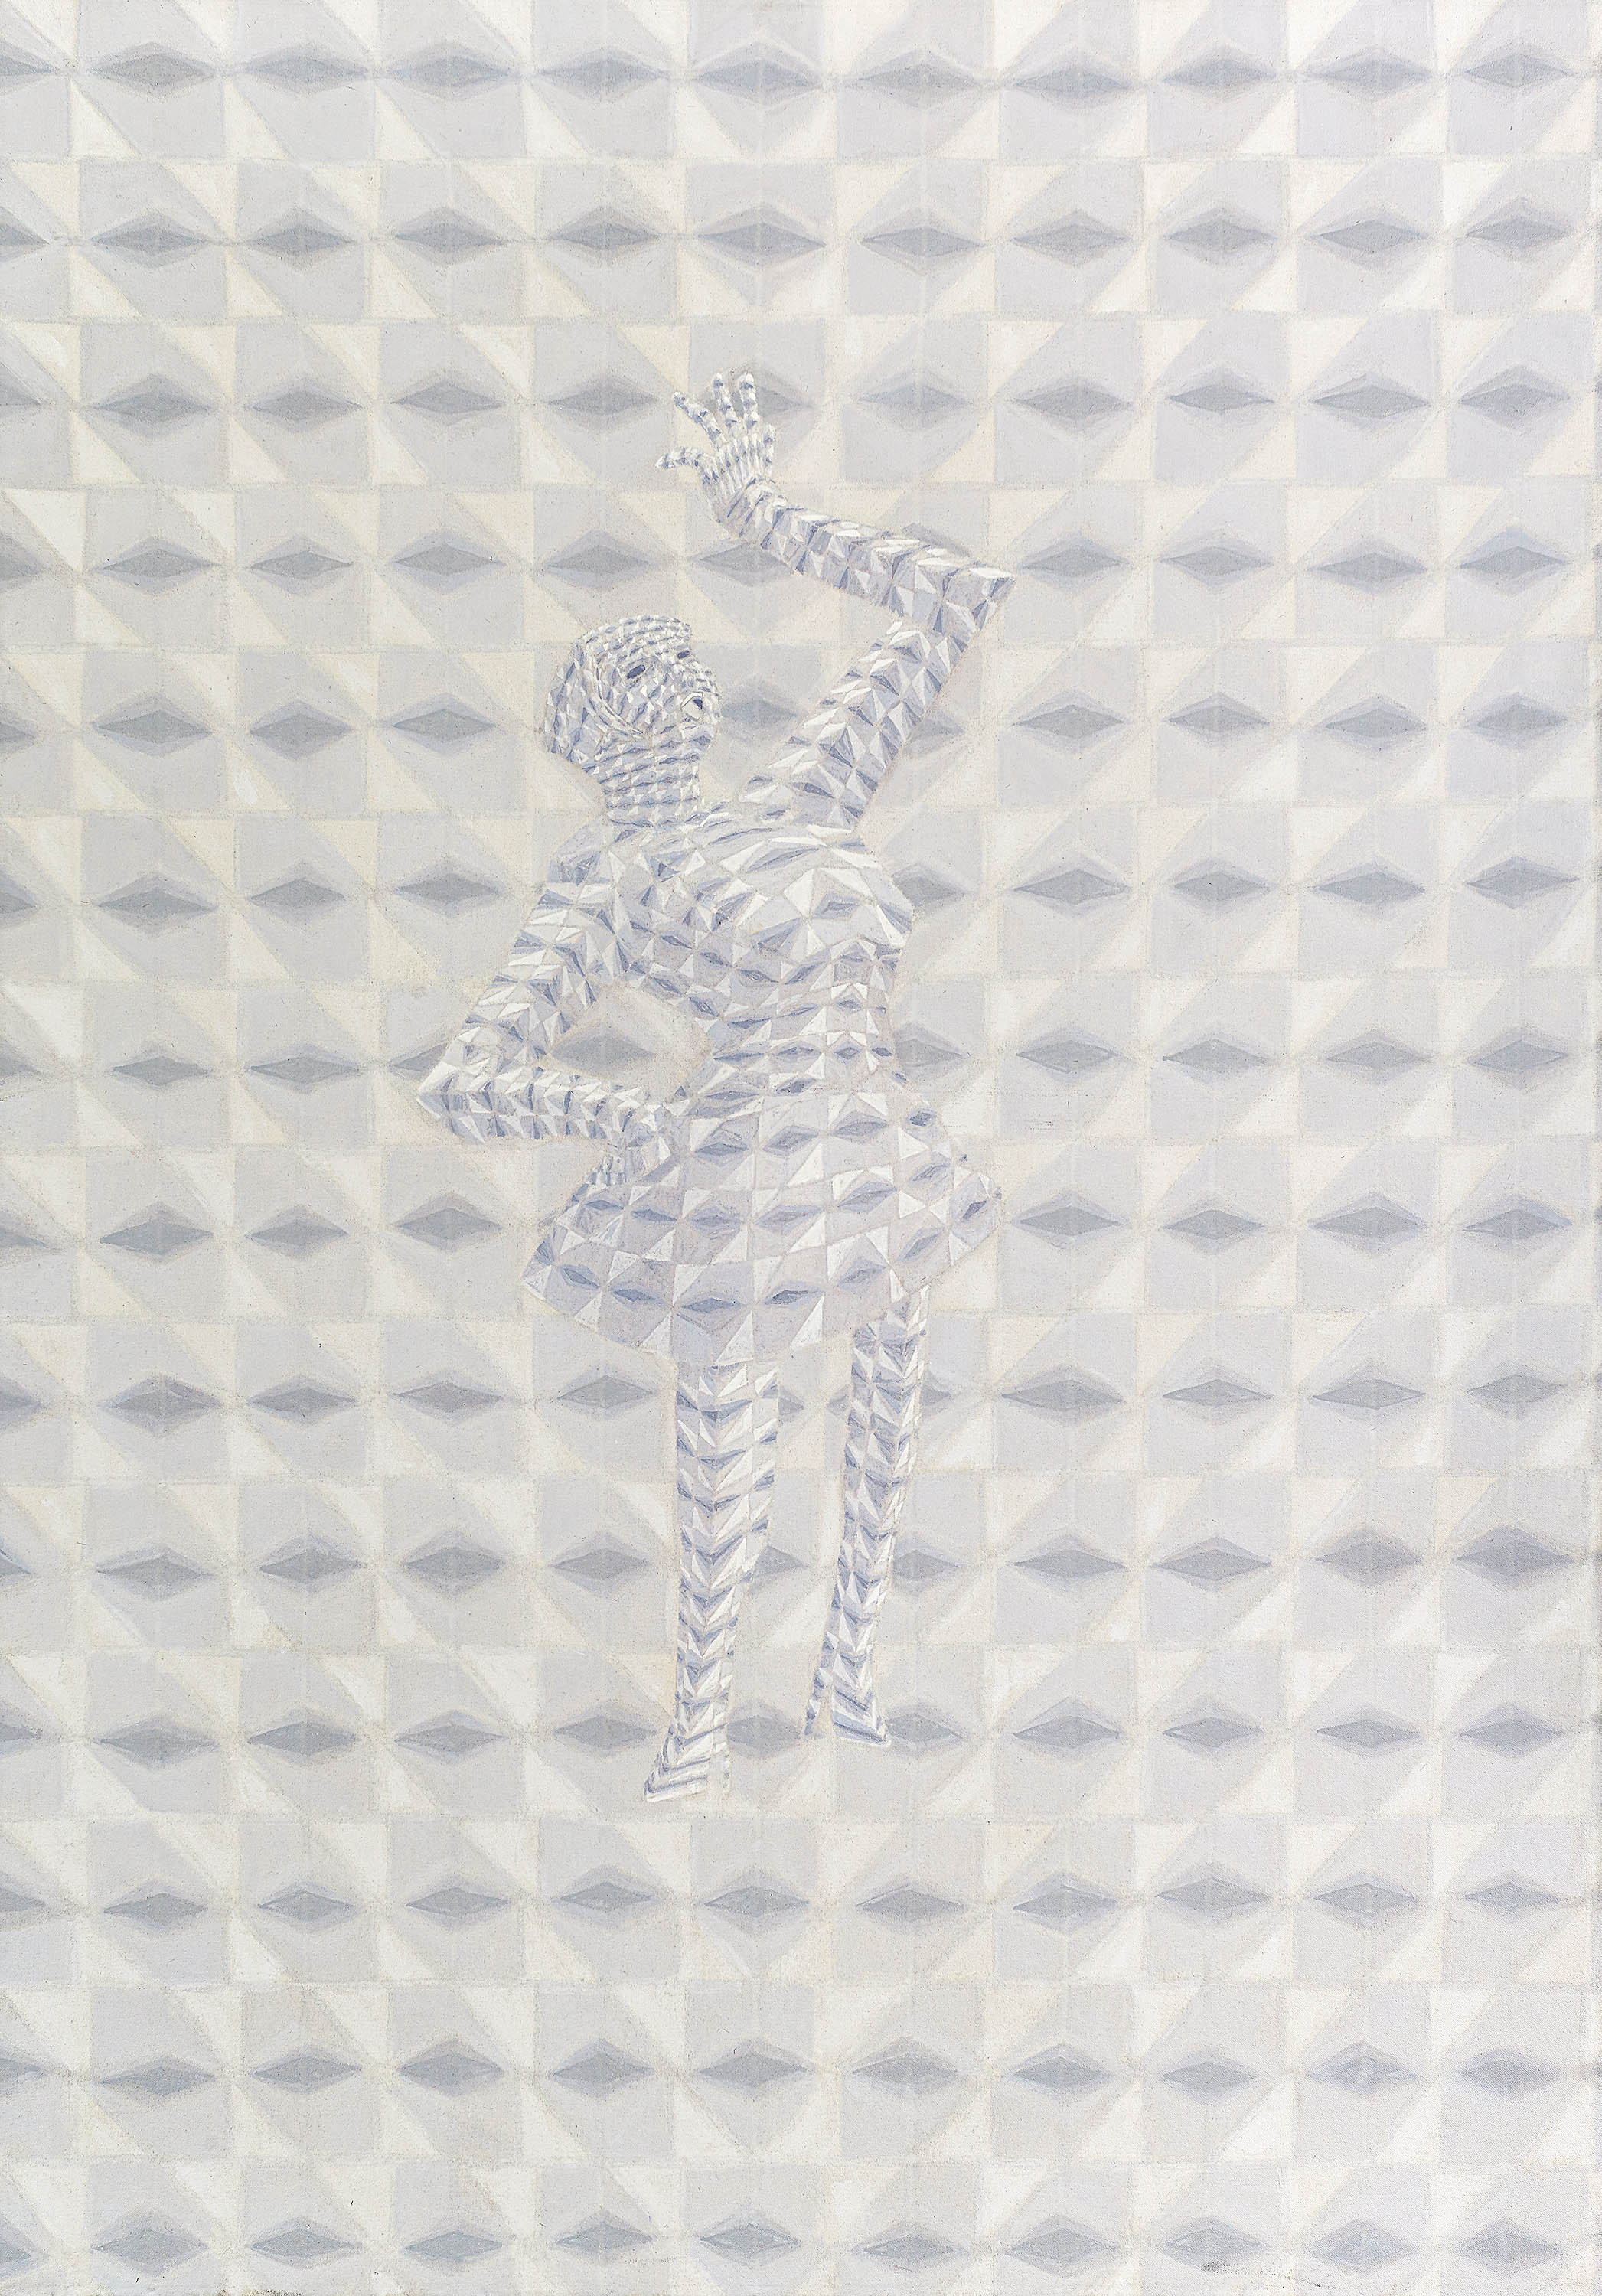 Satoshi Kojima - Gestalt, 68339-1, Van Ham Kunstauktionen